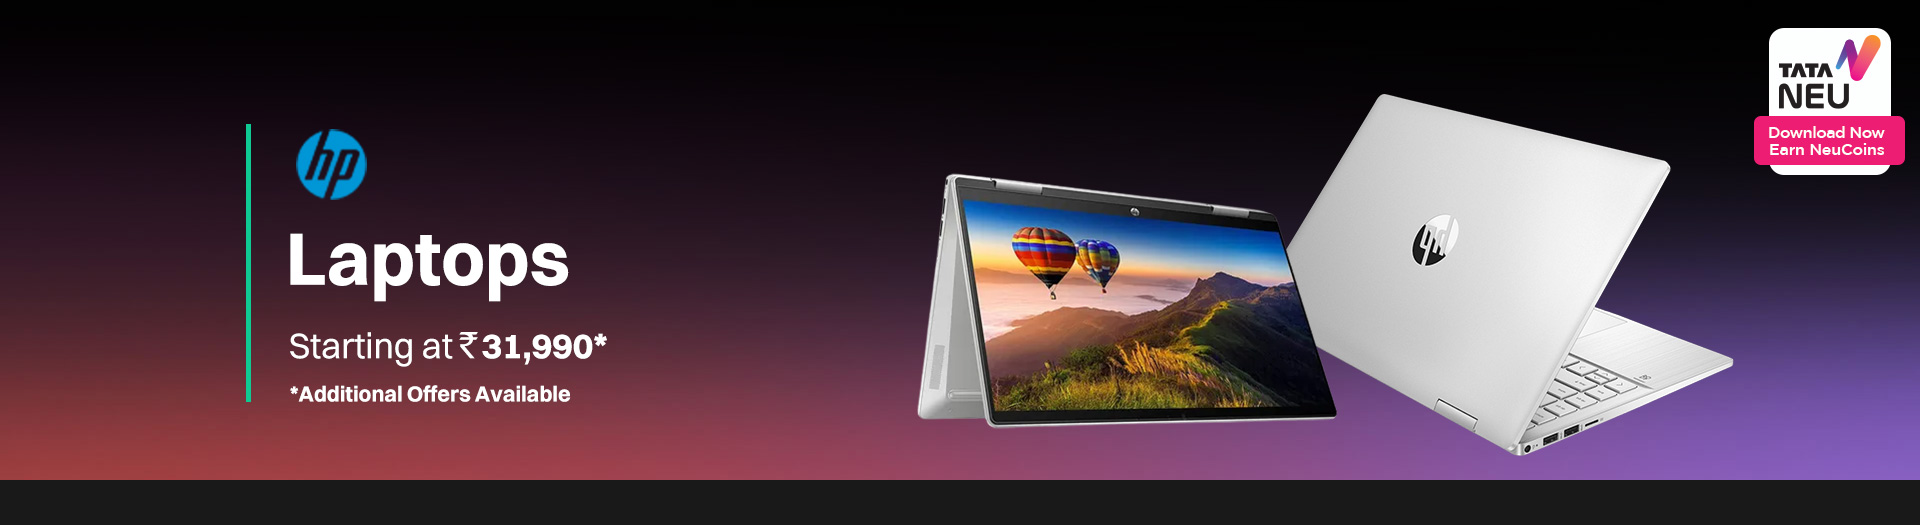 croma.com - Laptops by HP brand